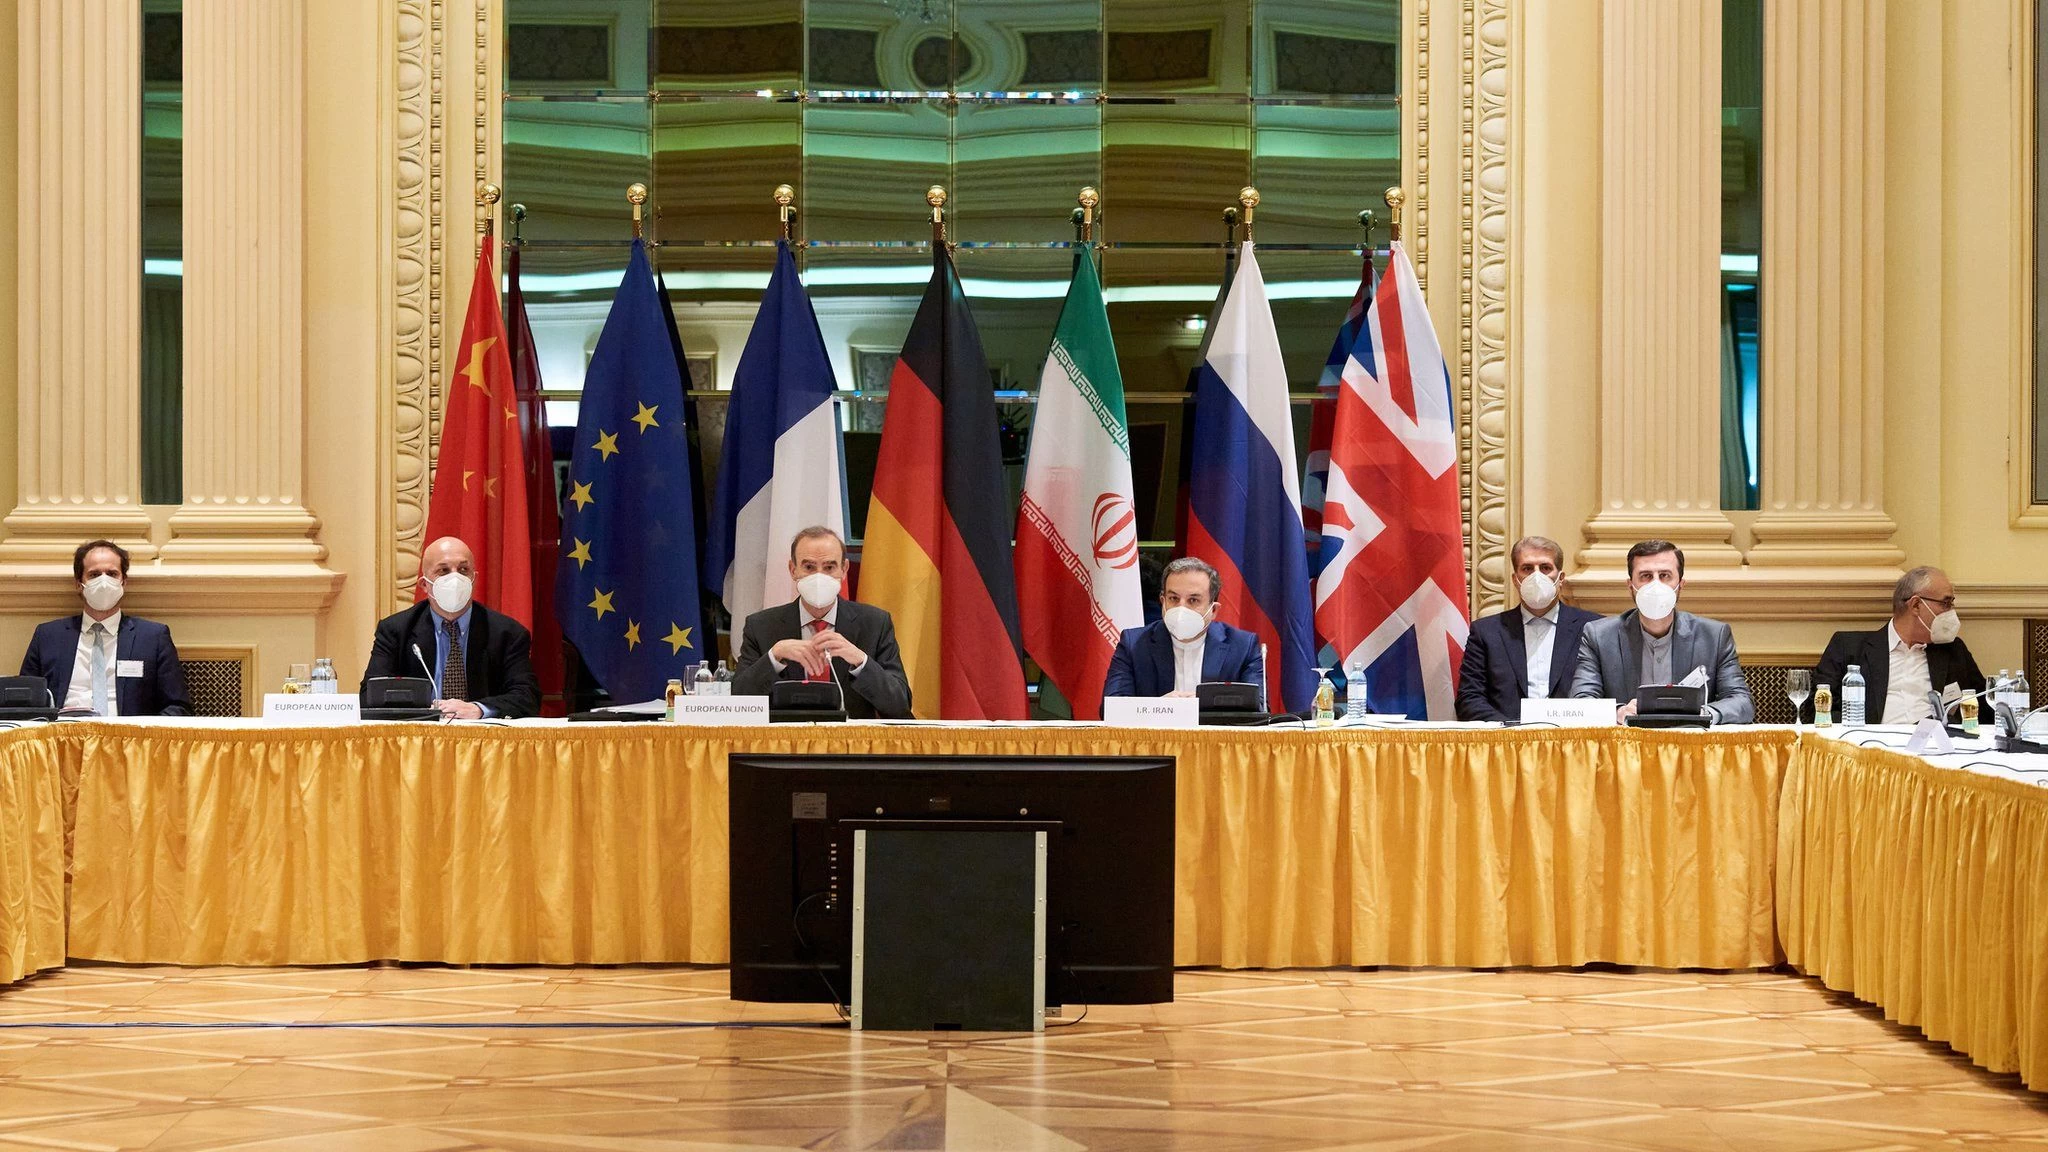 Nuclear talks between Iran, world powers postponed indefinitely